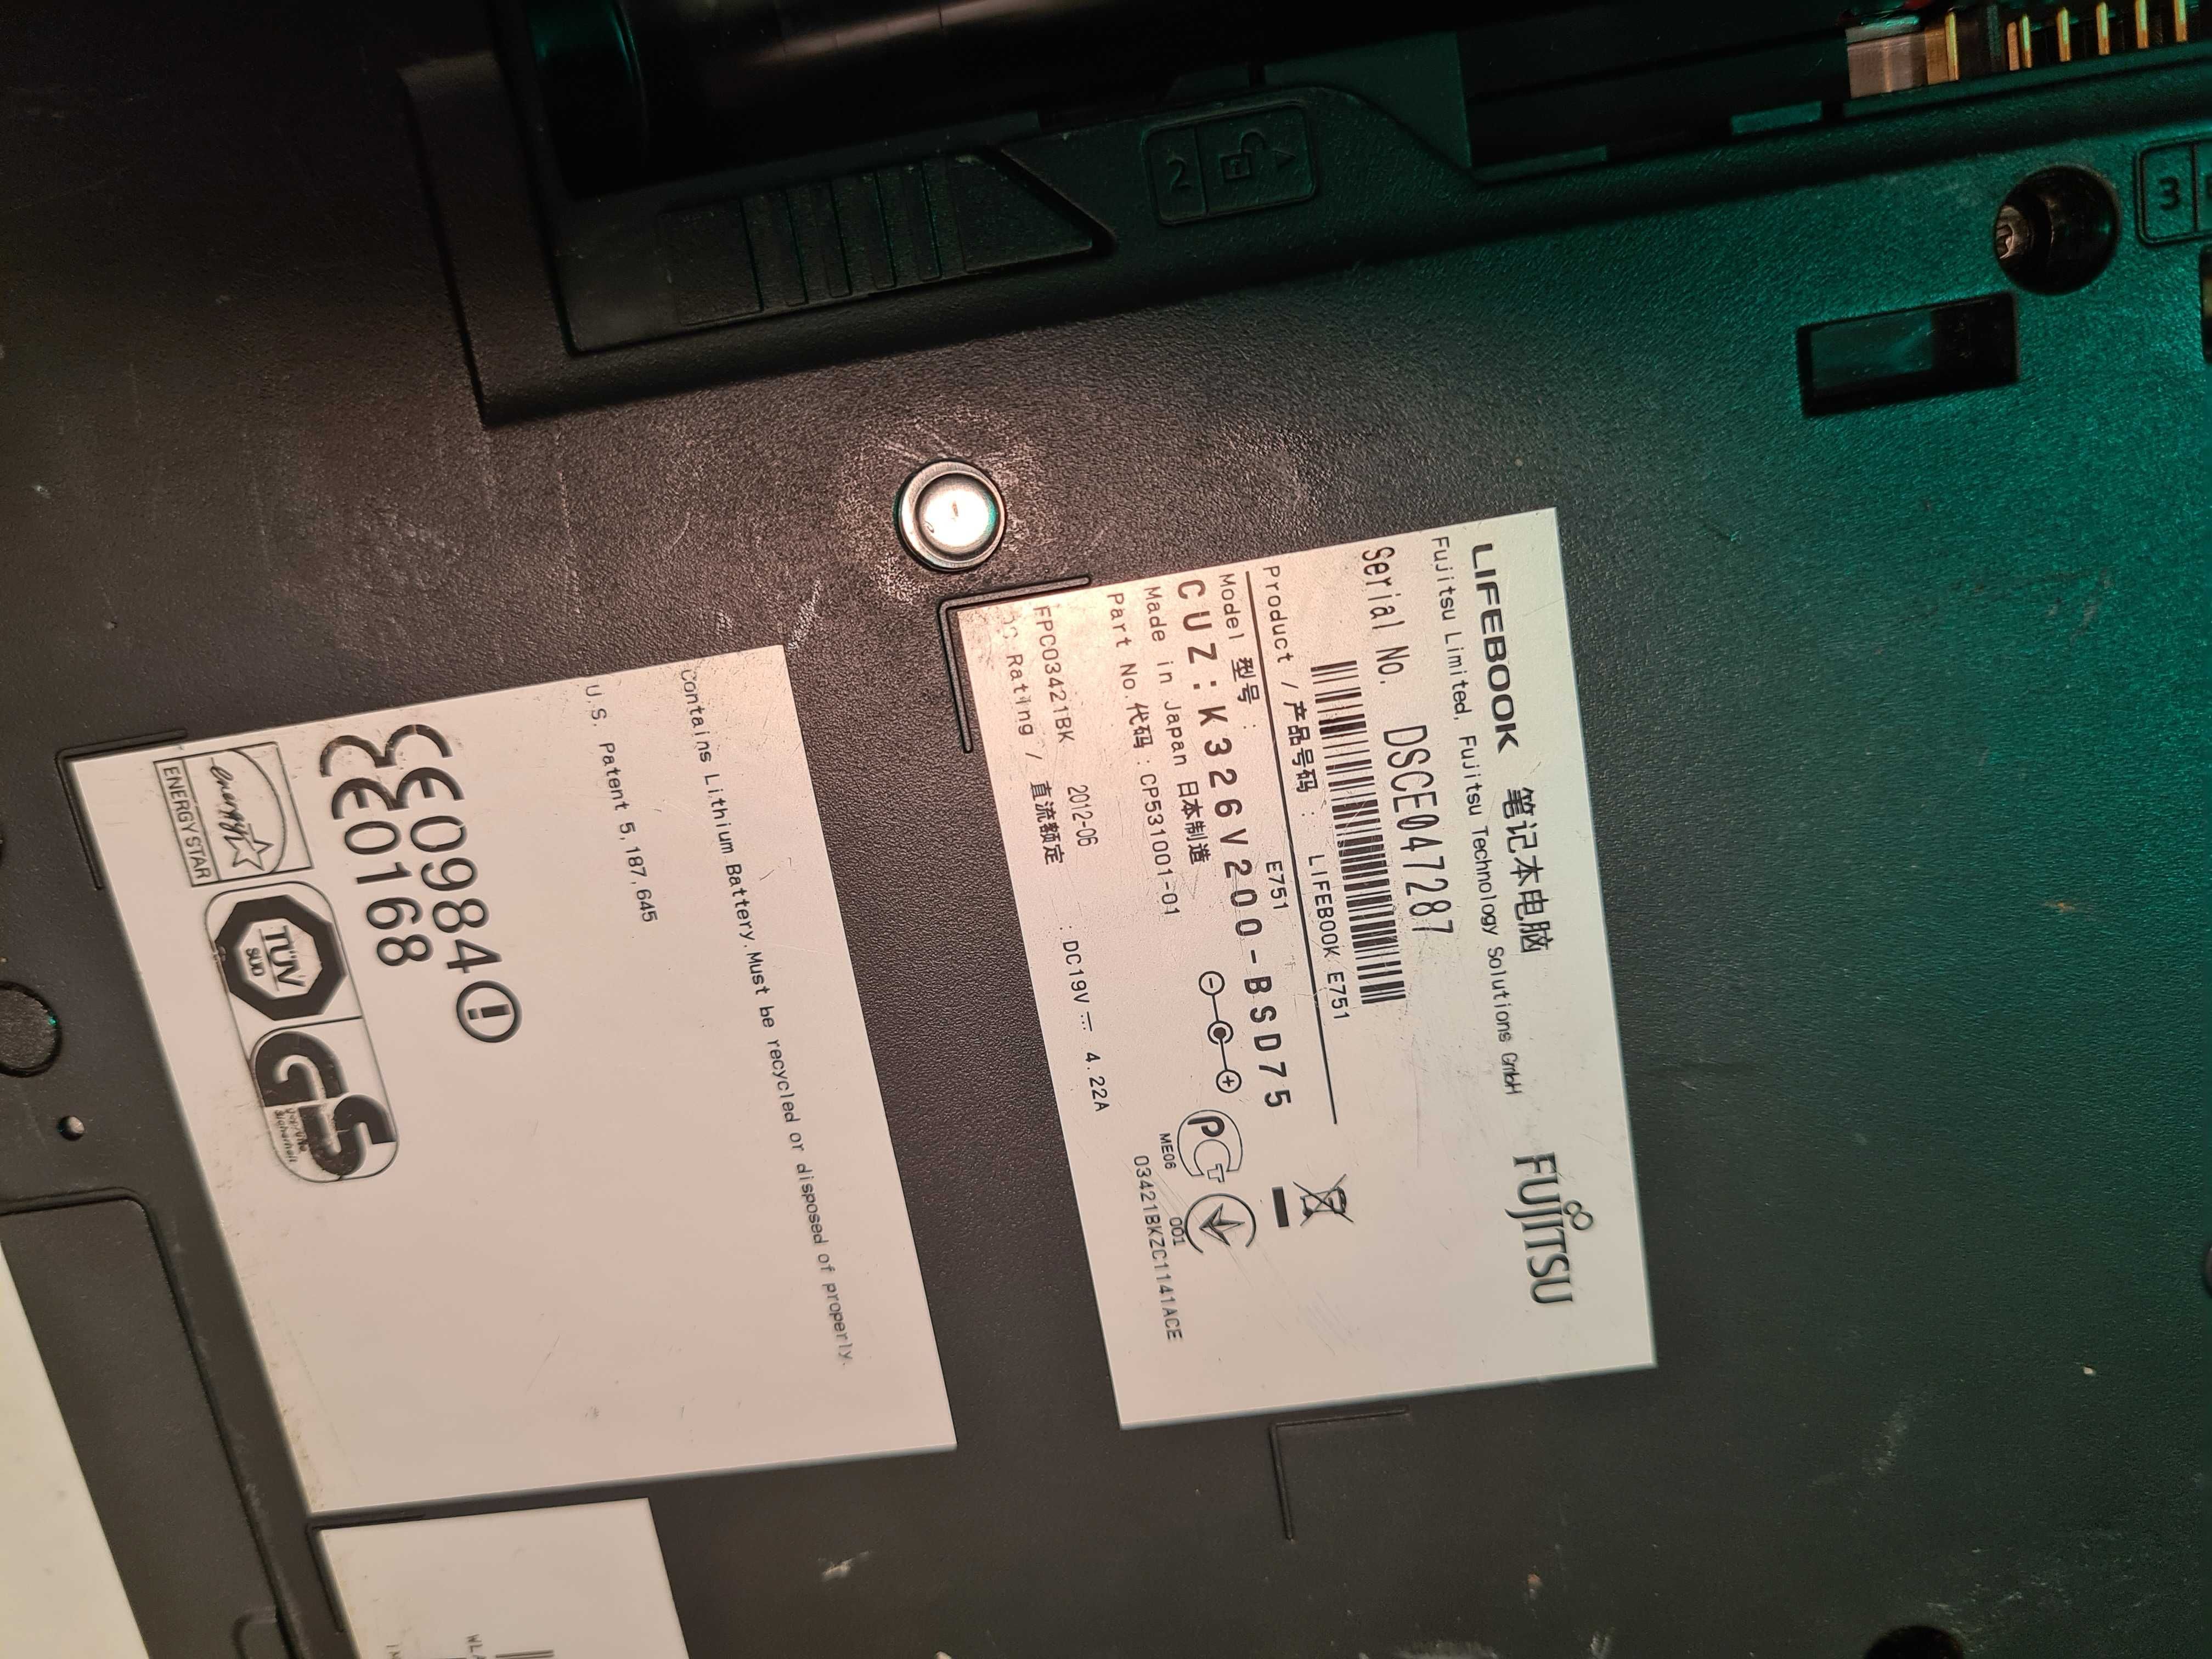 Defect Laptop Fujitsu Lifebook E751 i5-2450